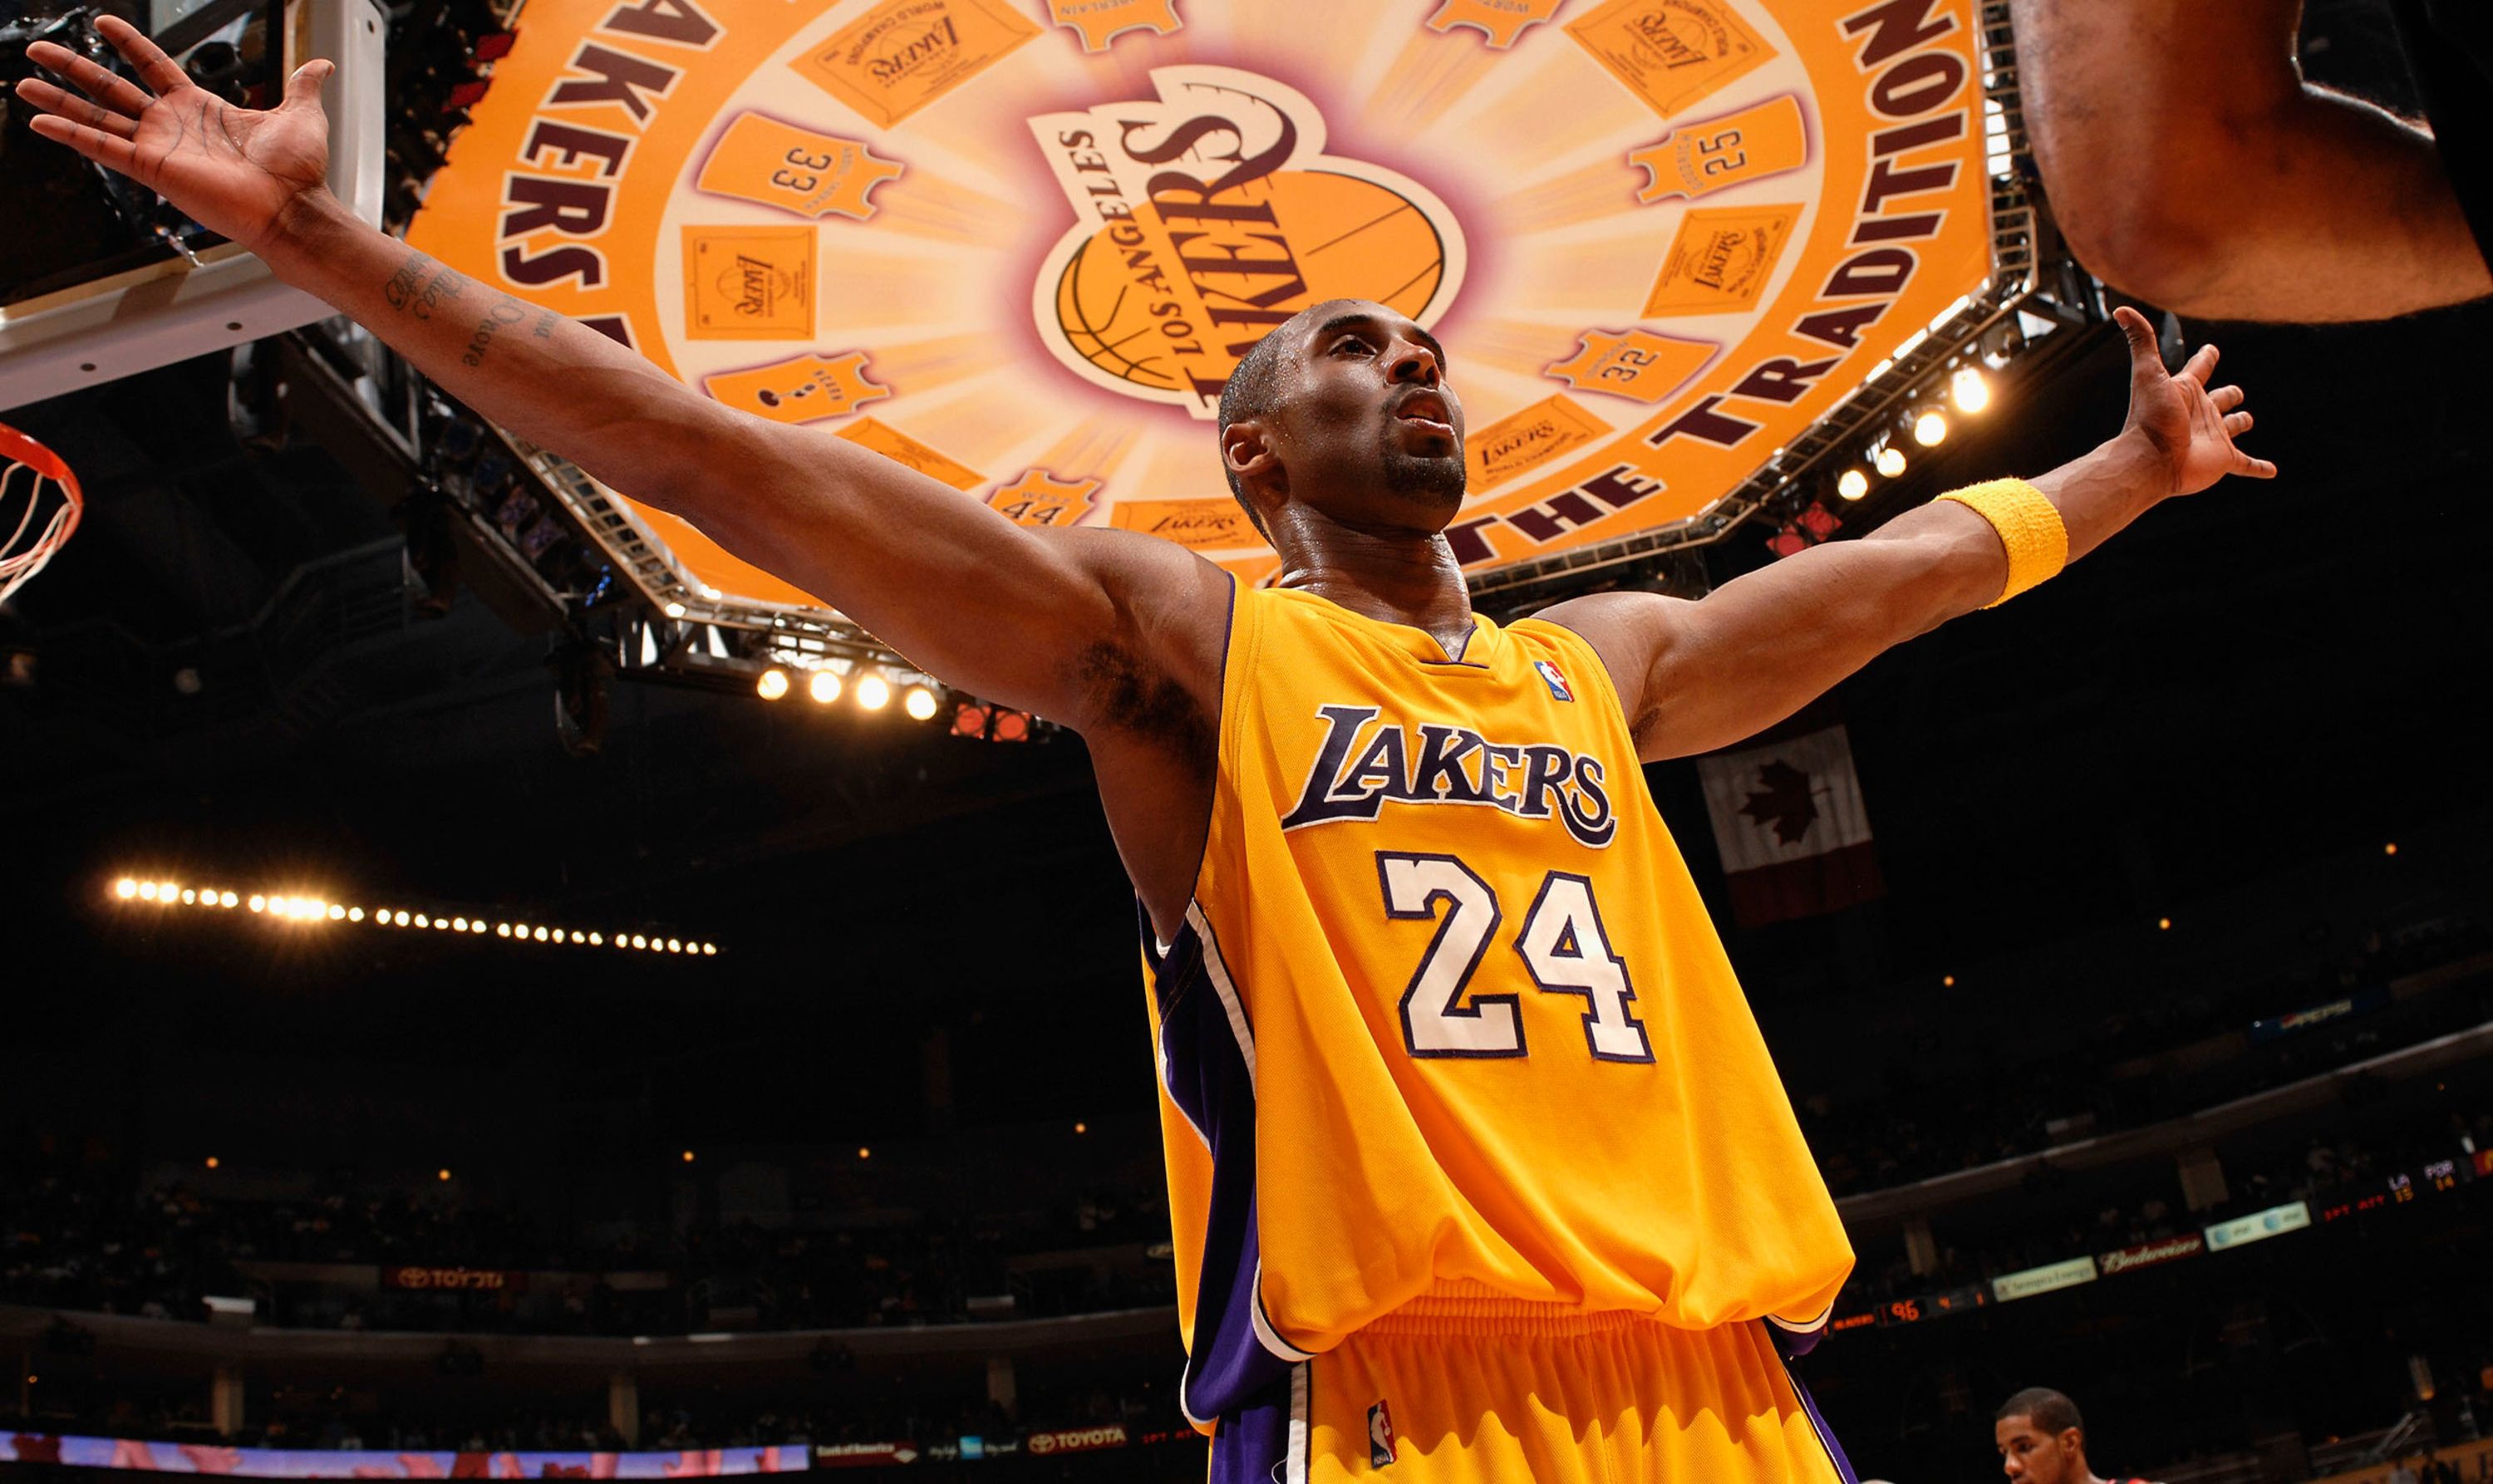 Photos: Lakers vs Jazz (1/17/22) Photo Gallery